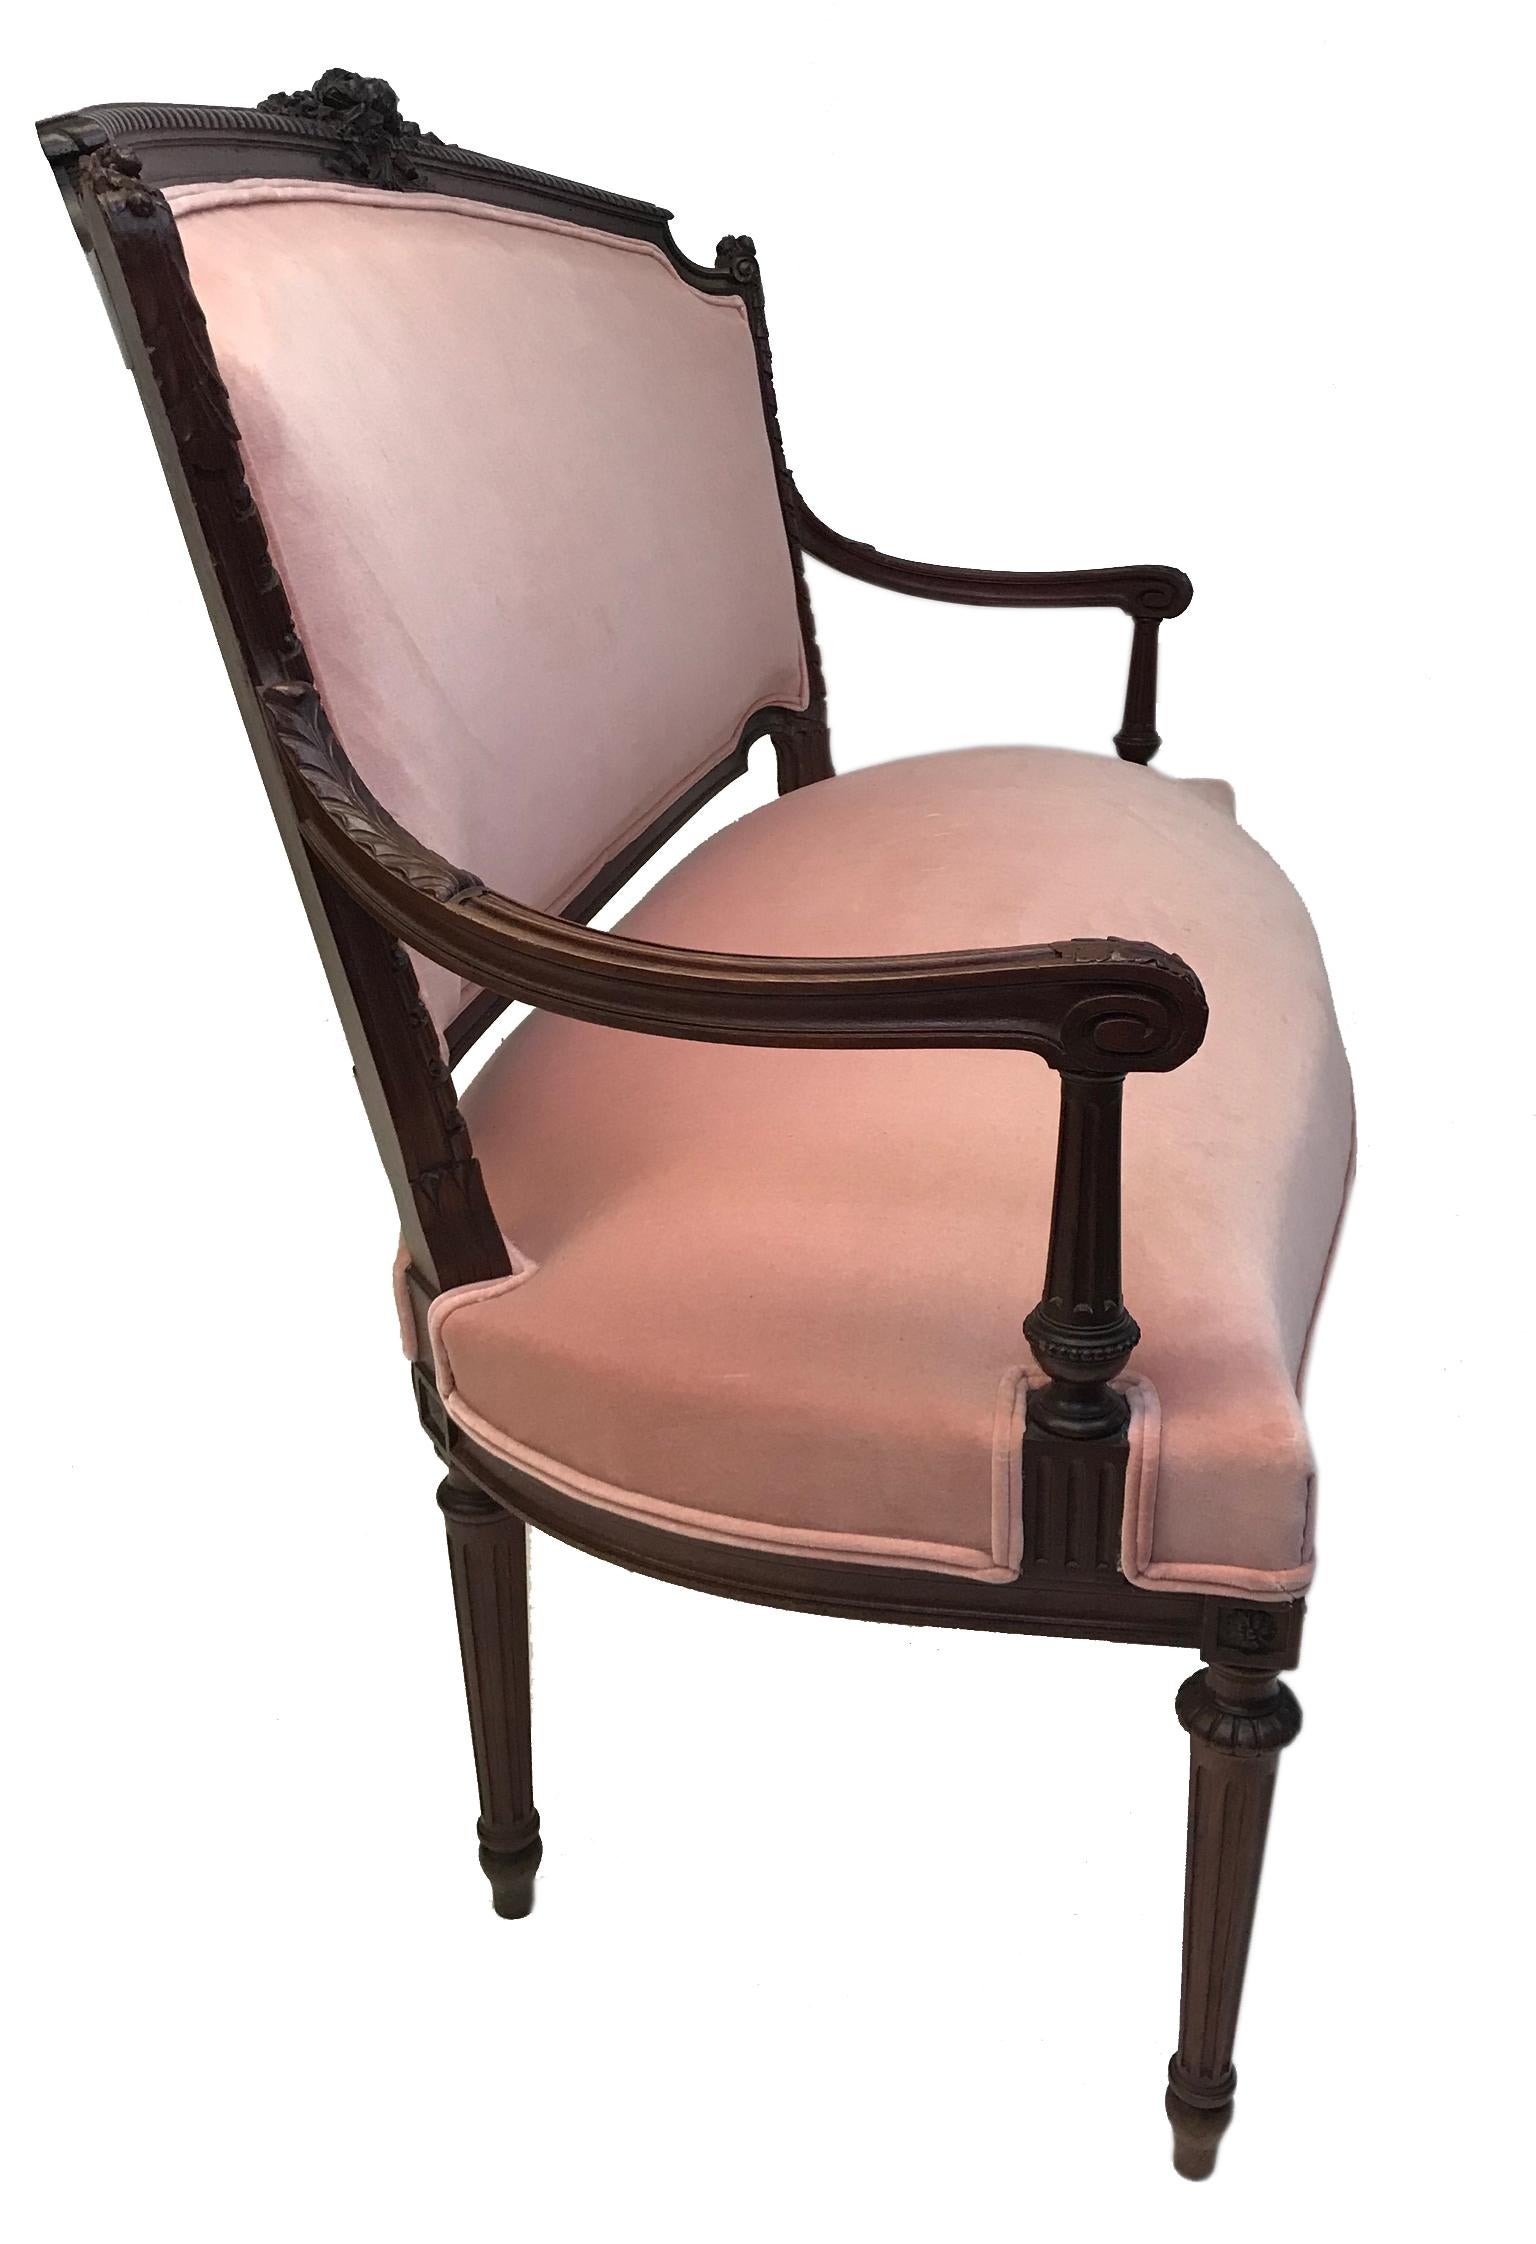 FRENCH Belle Époque SETTEE in LOUIS XVI Style Rose Pink Velvet Upholstery 1880 For Sale 1